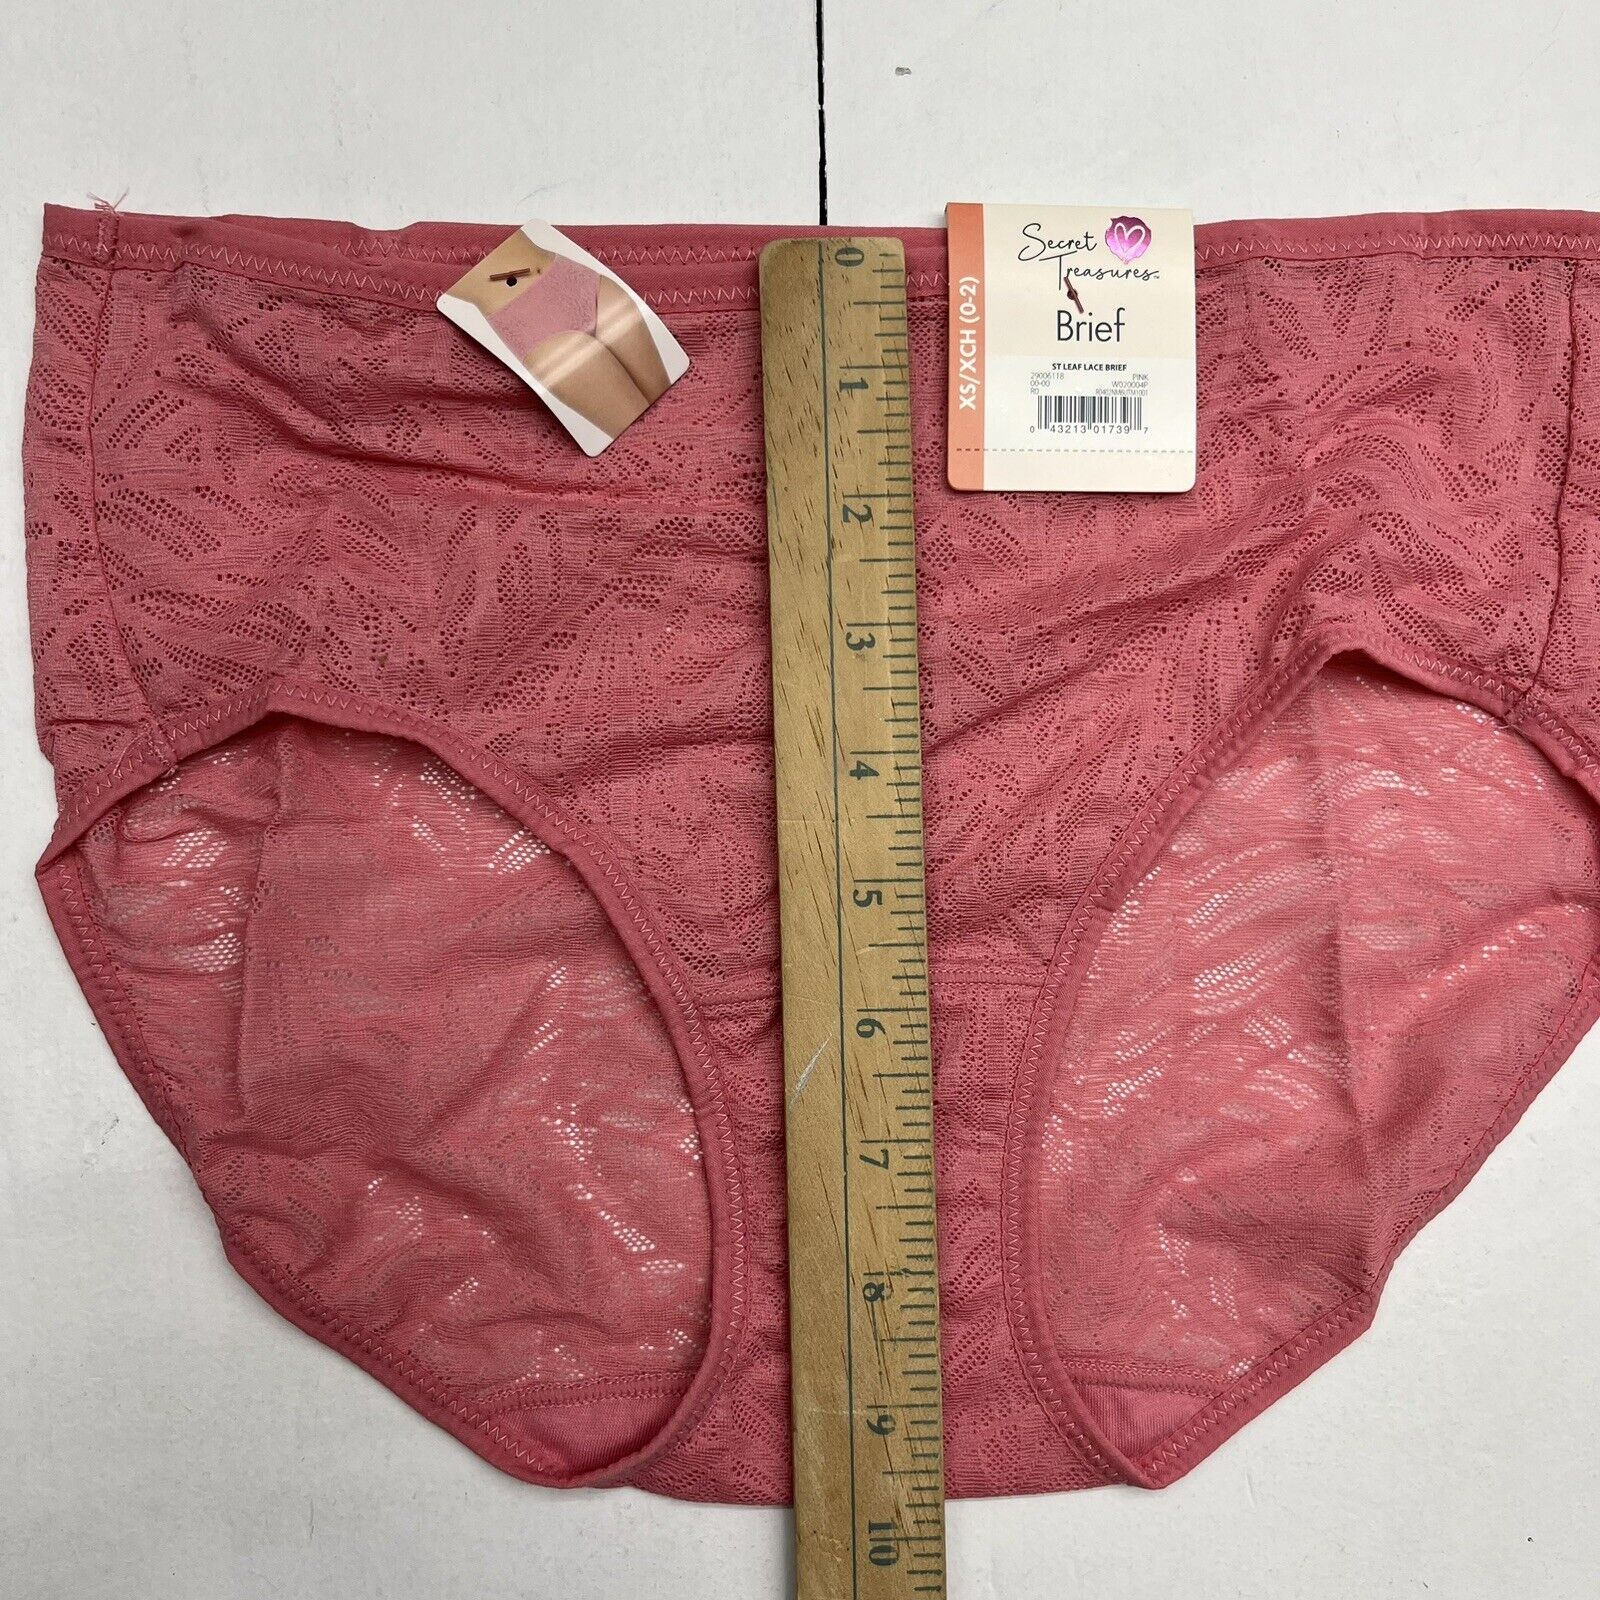 Secret Treasures Pink Leaf Lace Brief Panty Women's Size XS/XCH(0-2) N -  beyond exchange